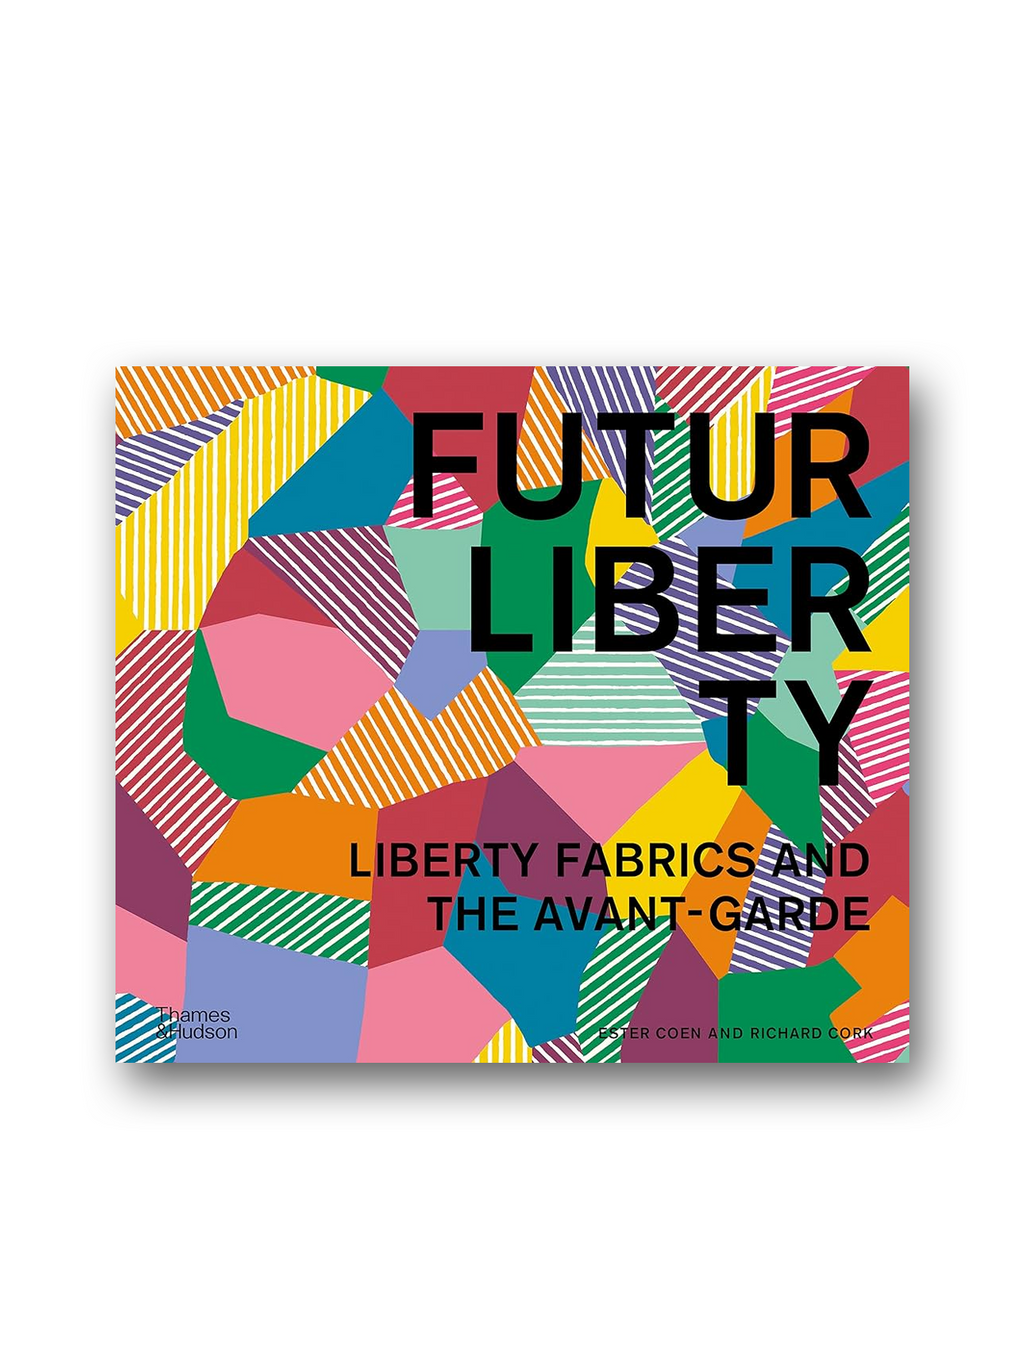 FuturLiberty: Liberty Fabrics and the Avant-Garde